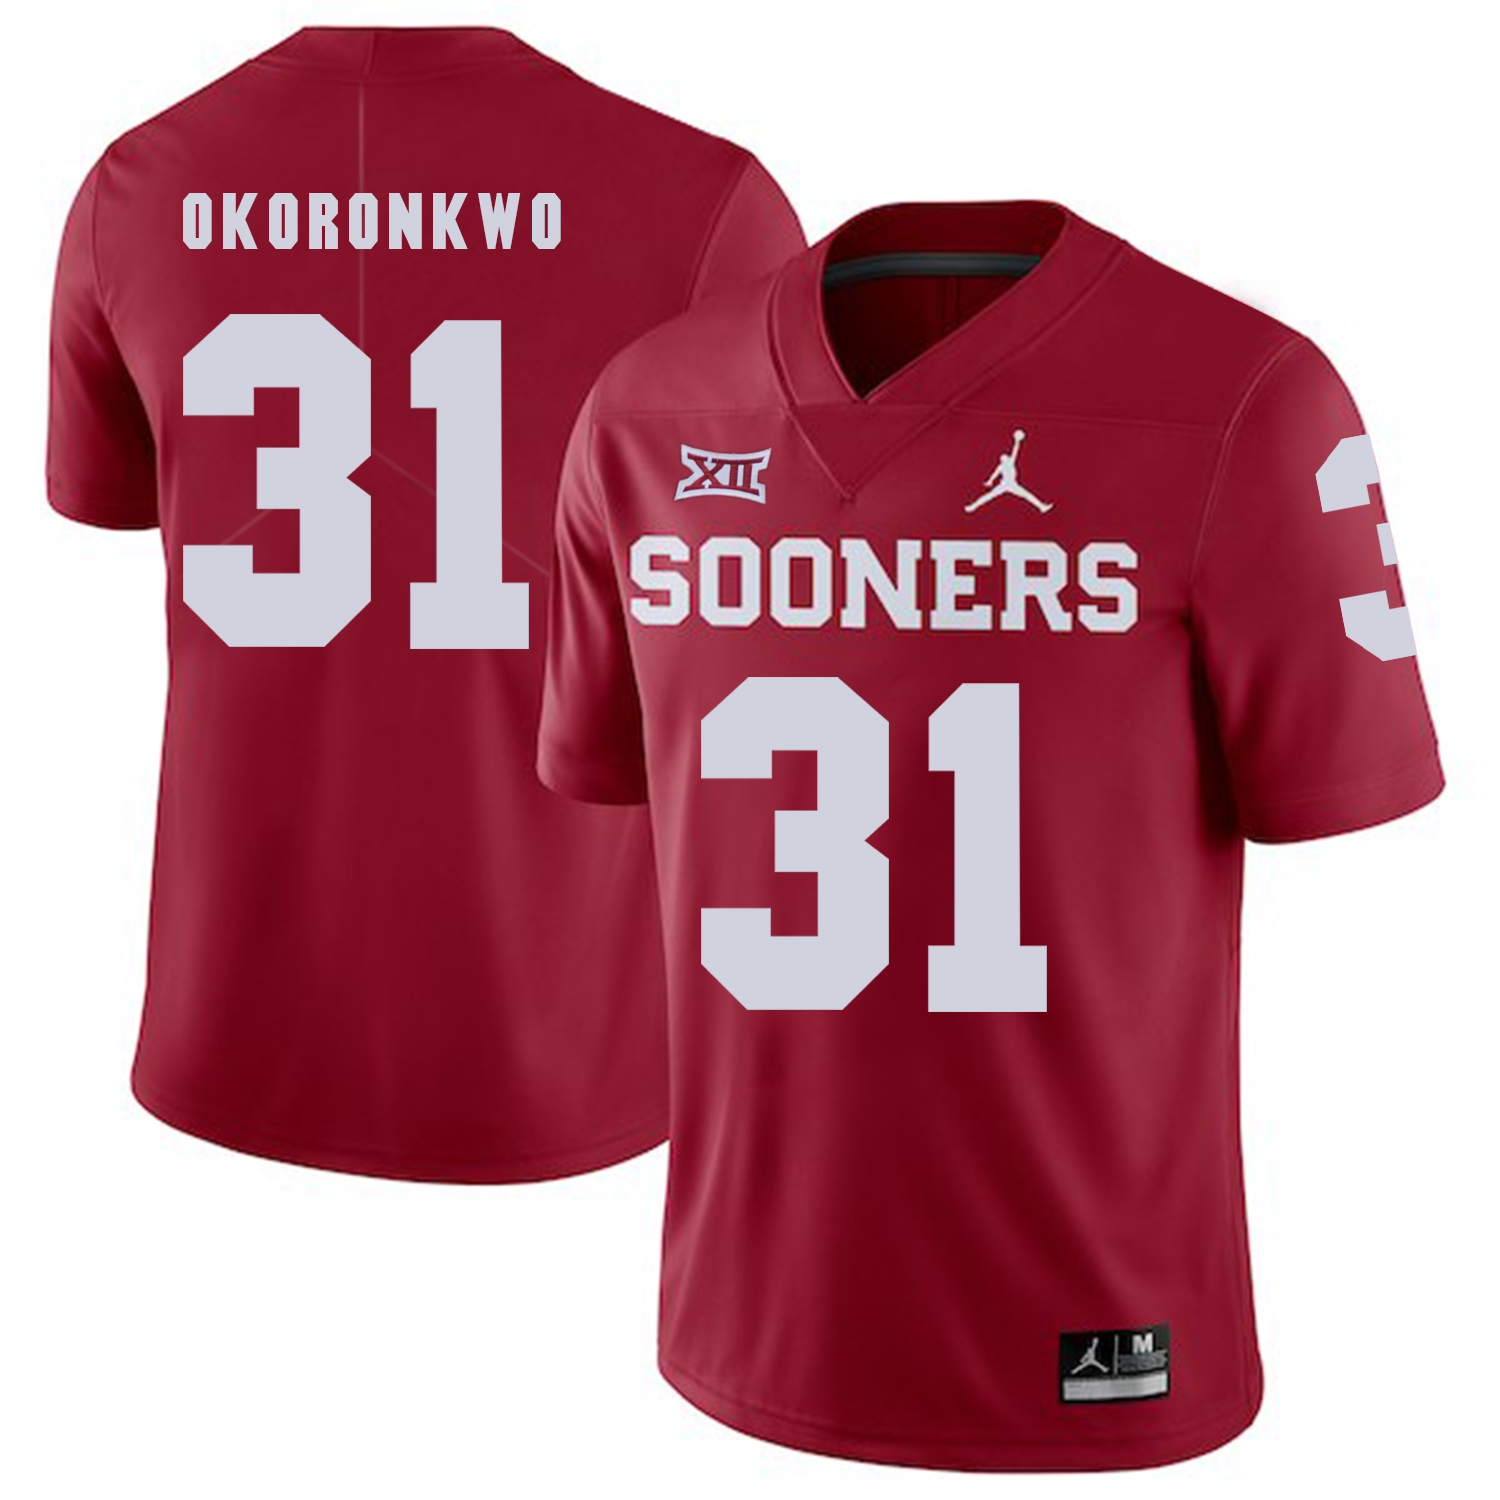 Oklahoma Sooners 31 Obo Okoronkwo Red College Football Jersey